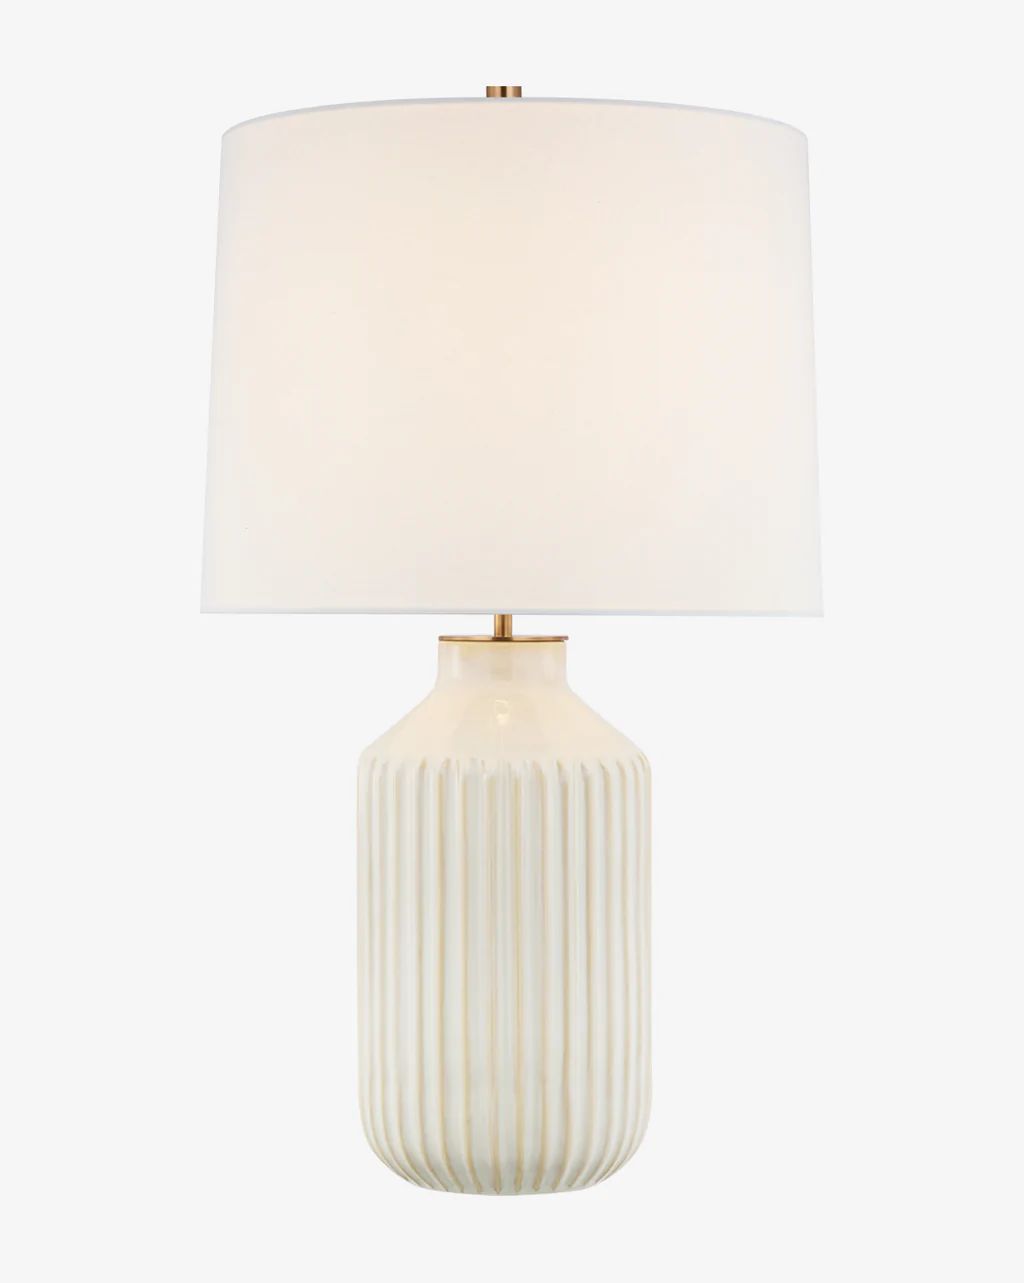 Braylen Table Lamp | McGee & Co.